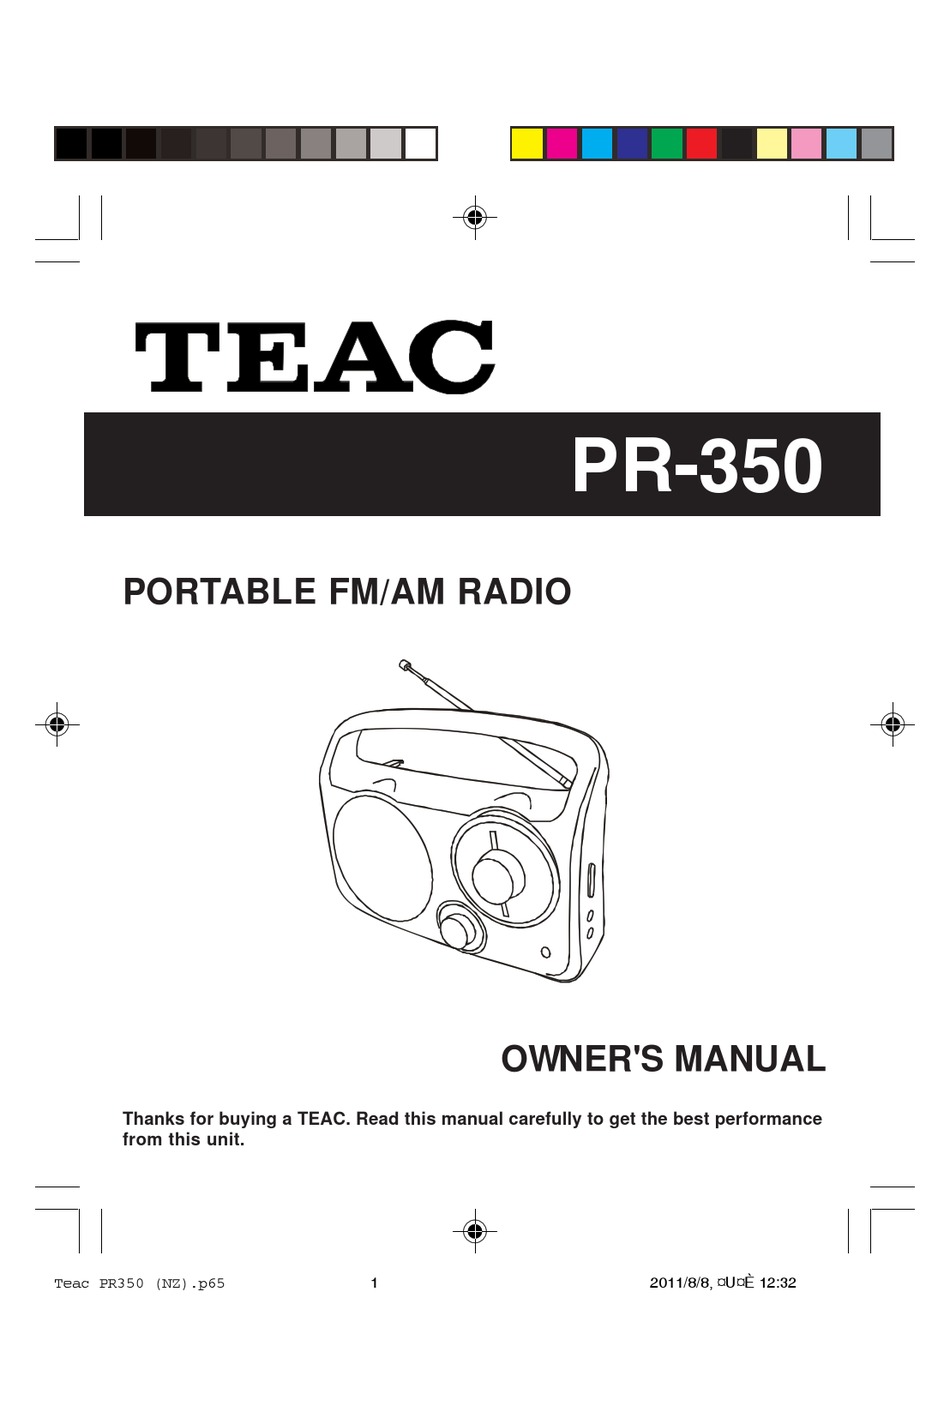 TEAC PR-350 OWNER'S MANUAL Pdf Download | ManualsLib